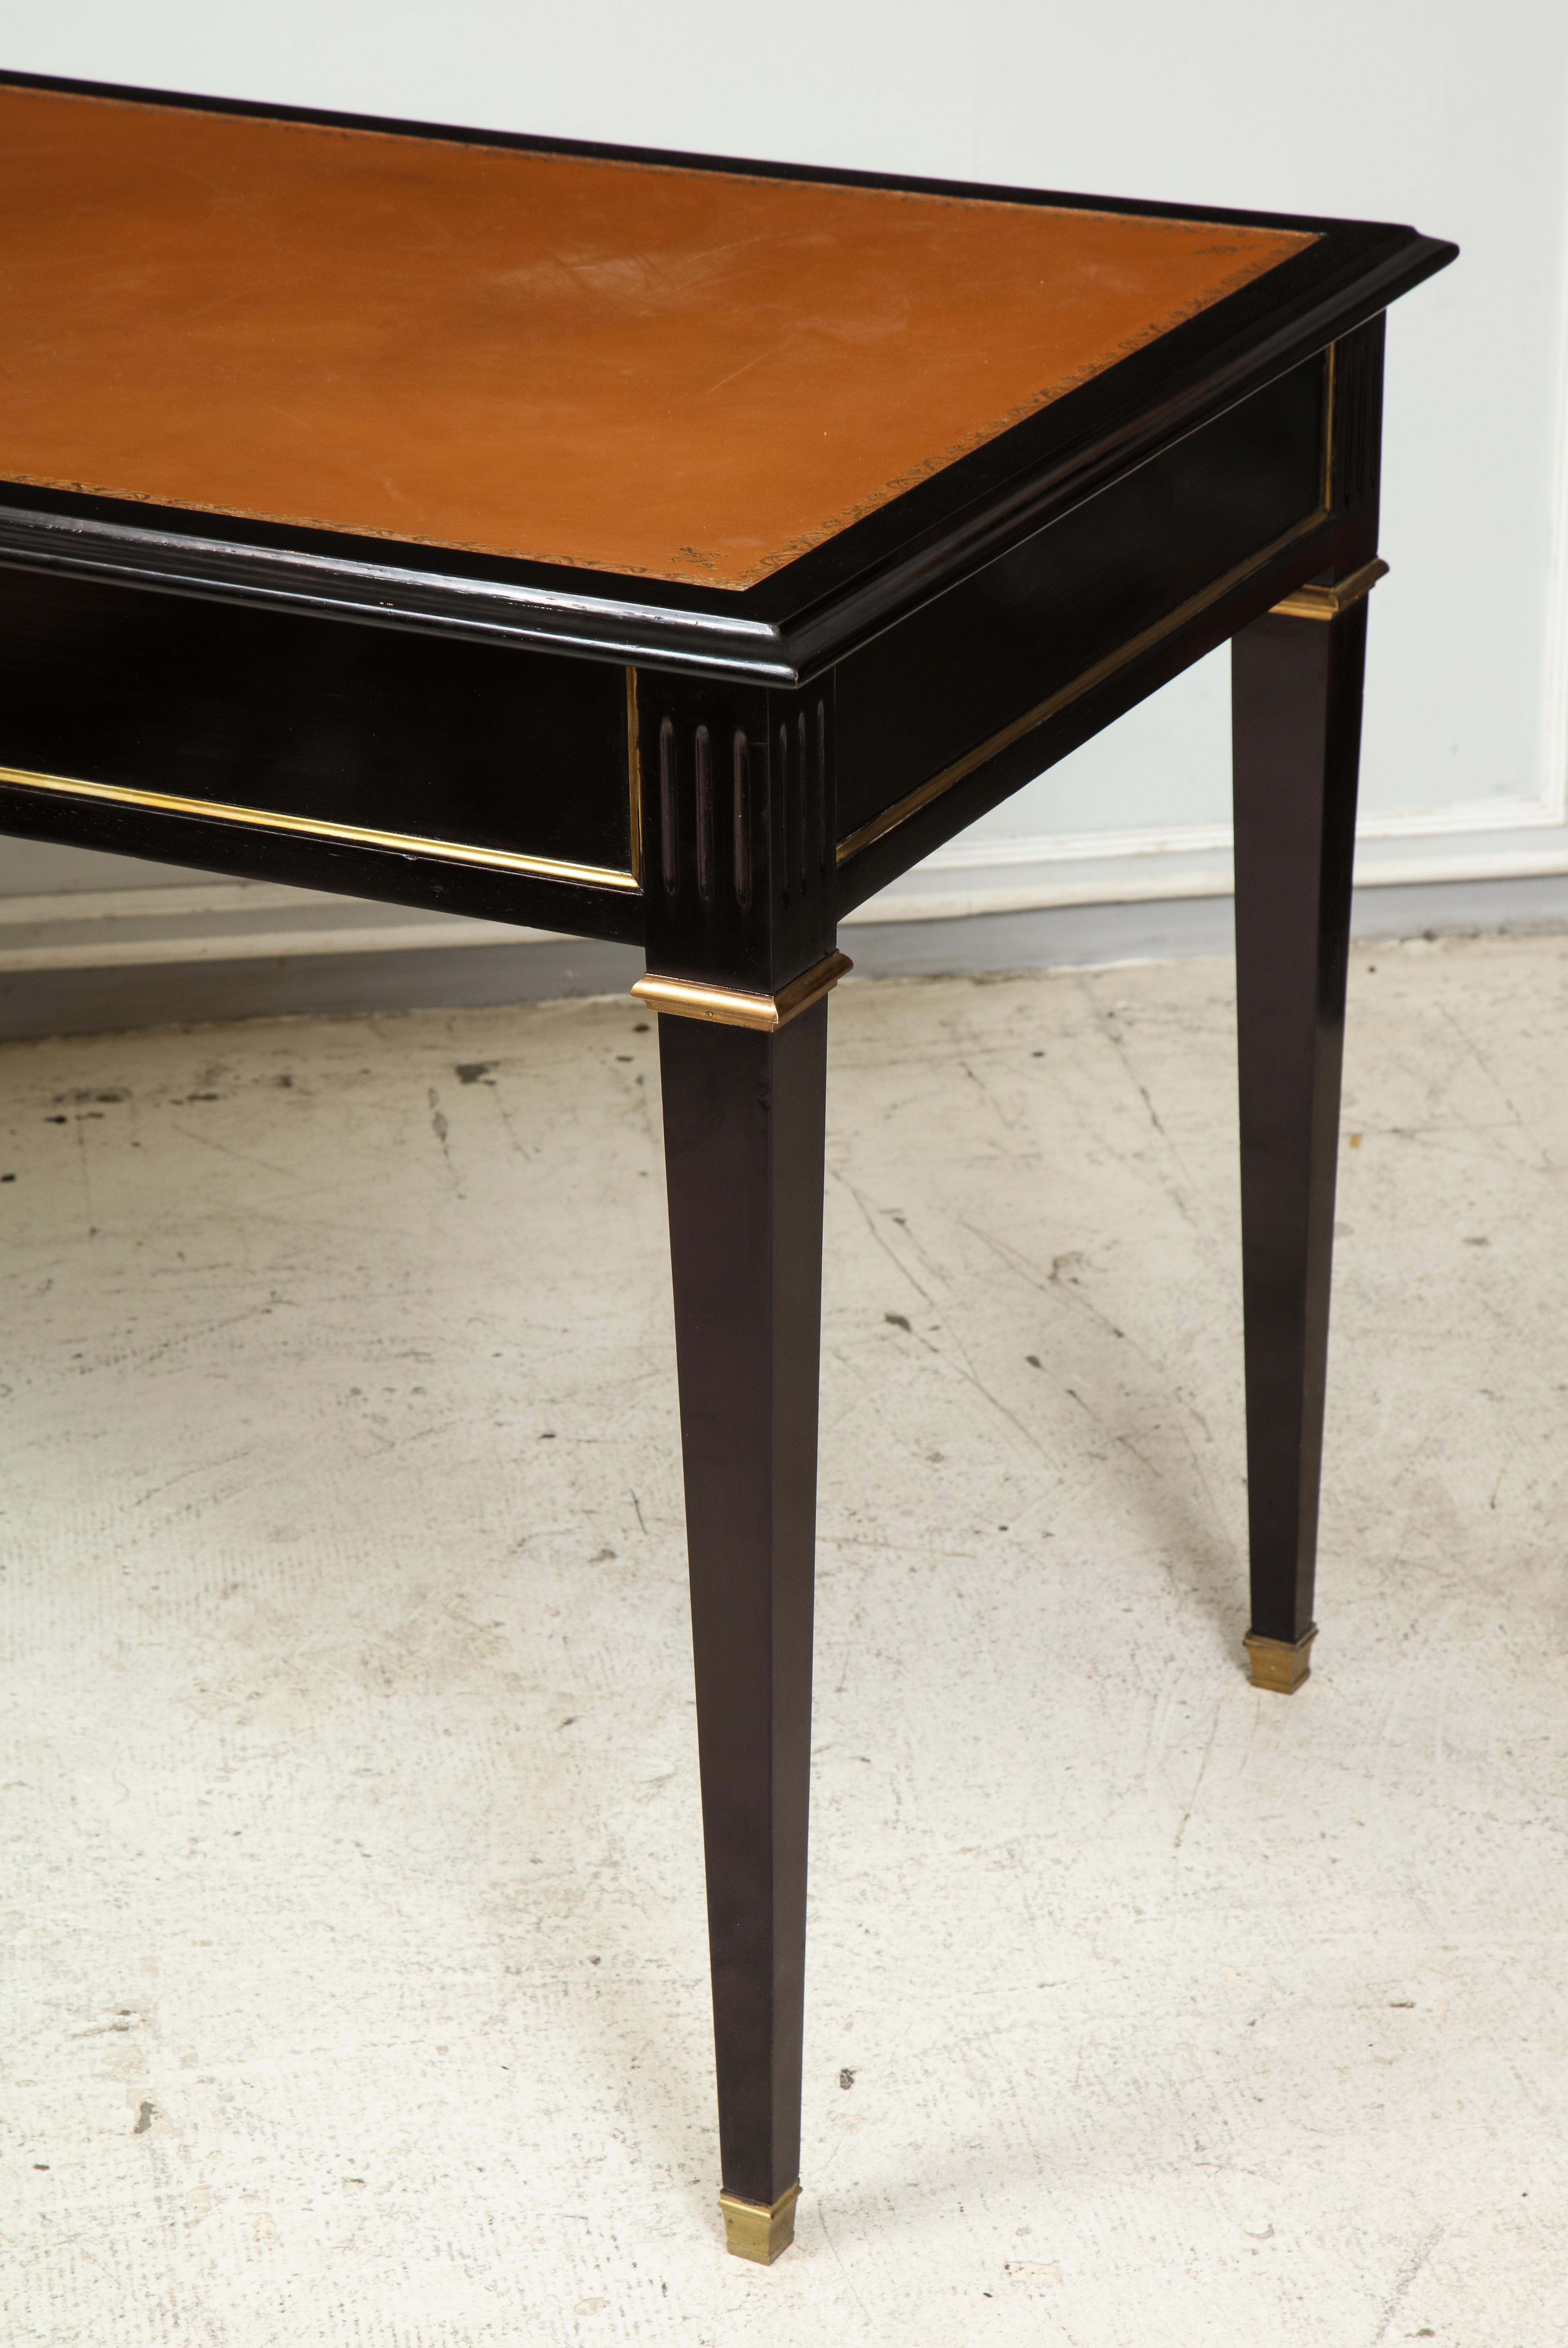 20th Century Ebonized Leather-Top Bronze-Mounted Bureauplat Desk